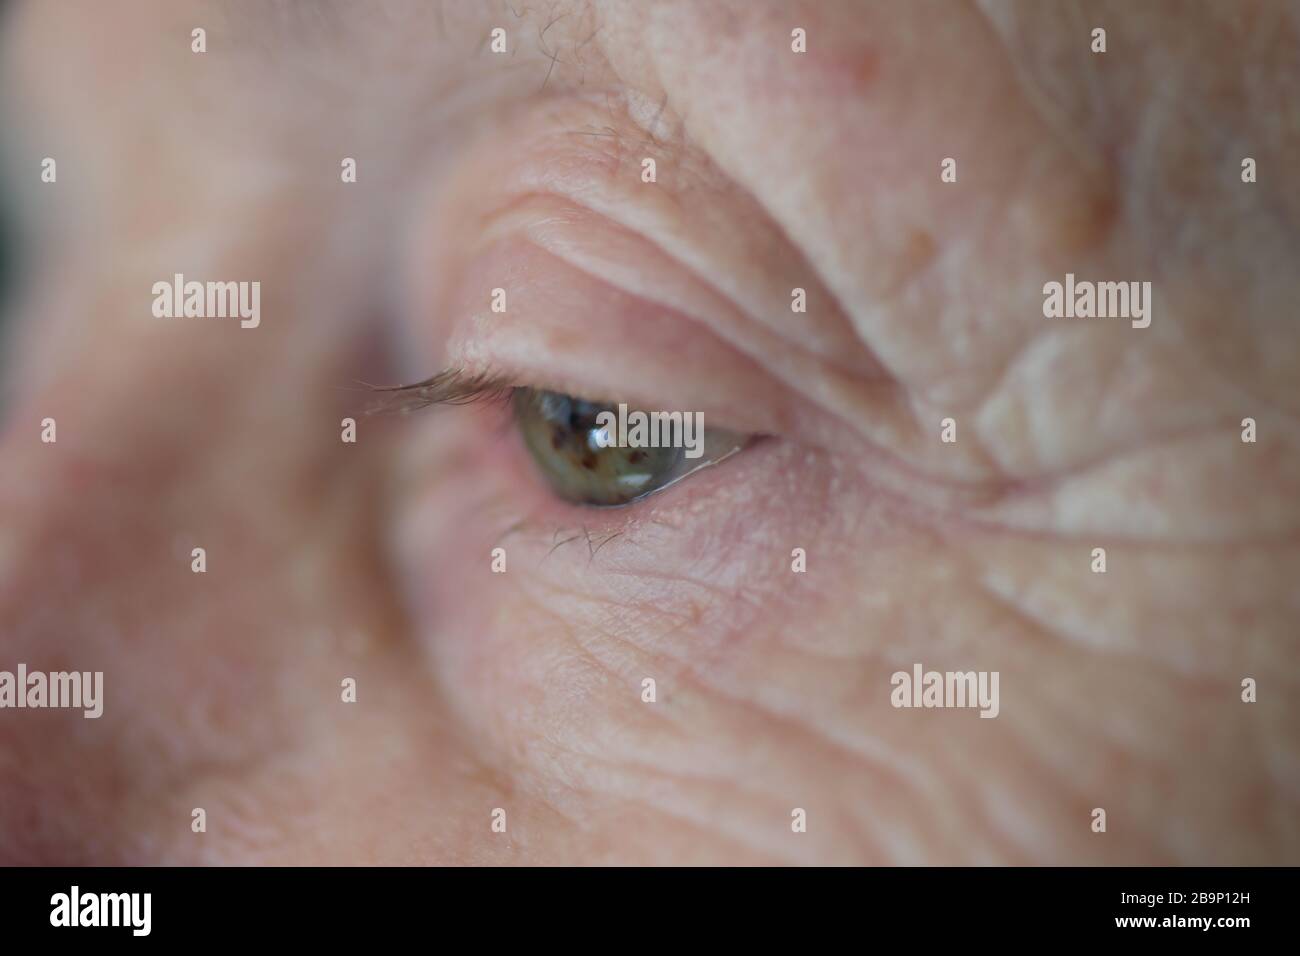 Close-up of senior woman's eye Stock Photo